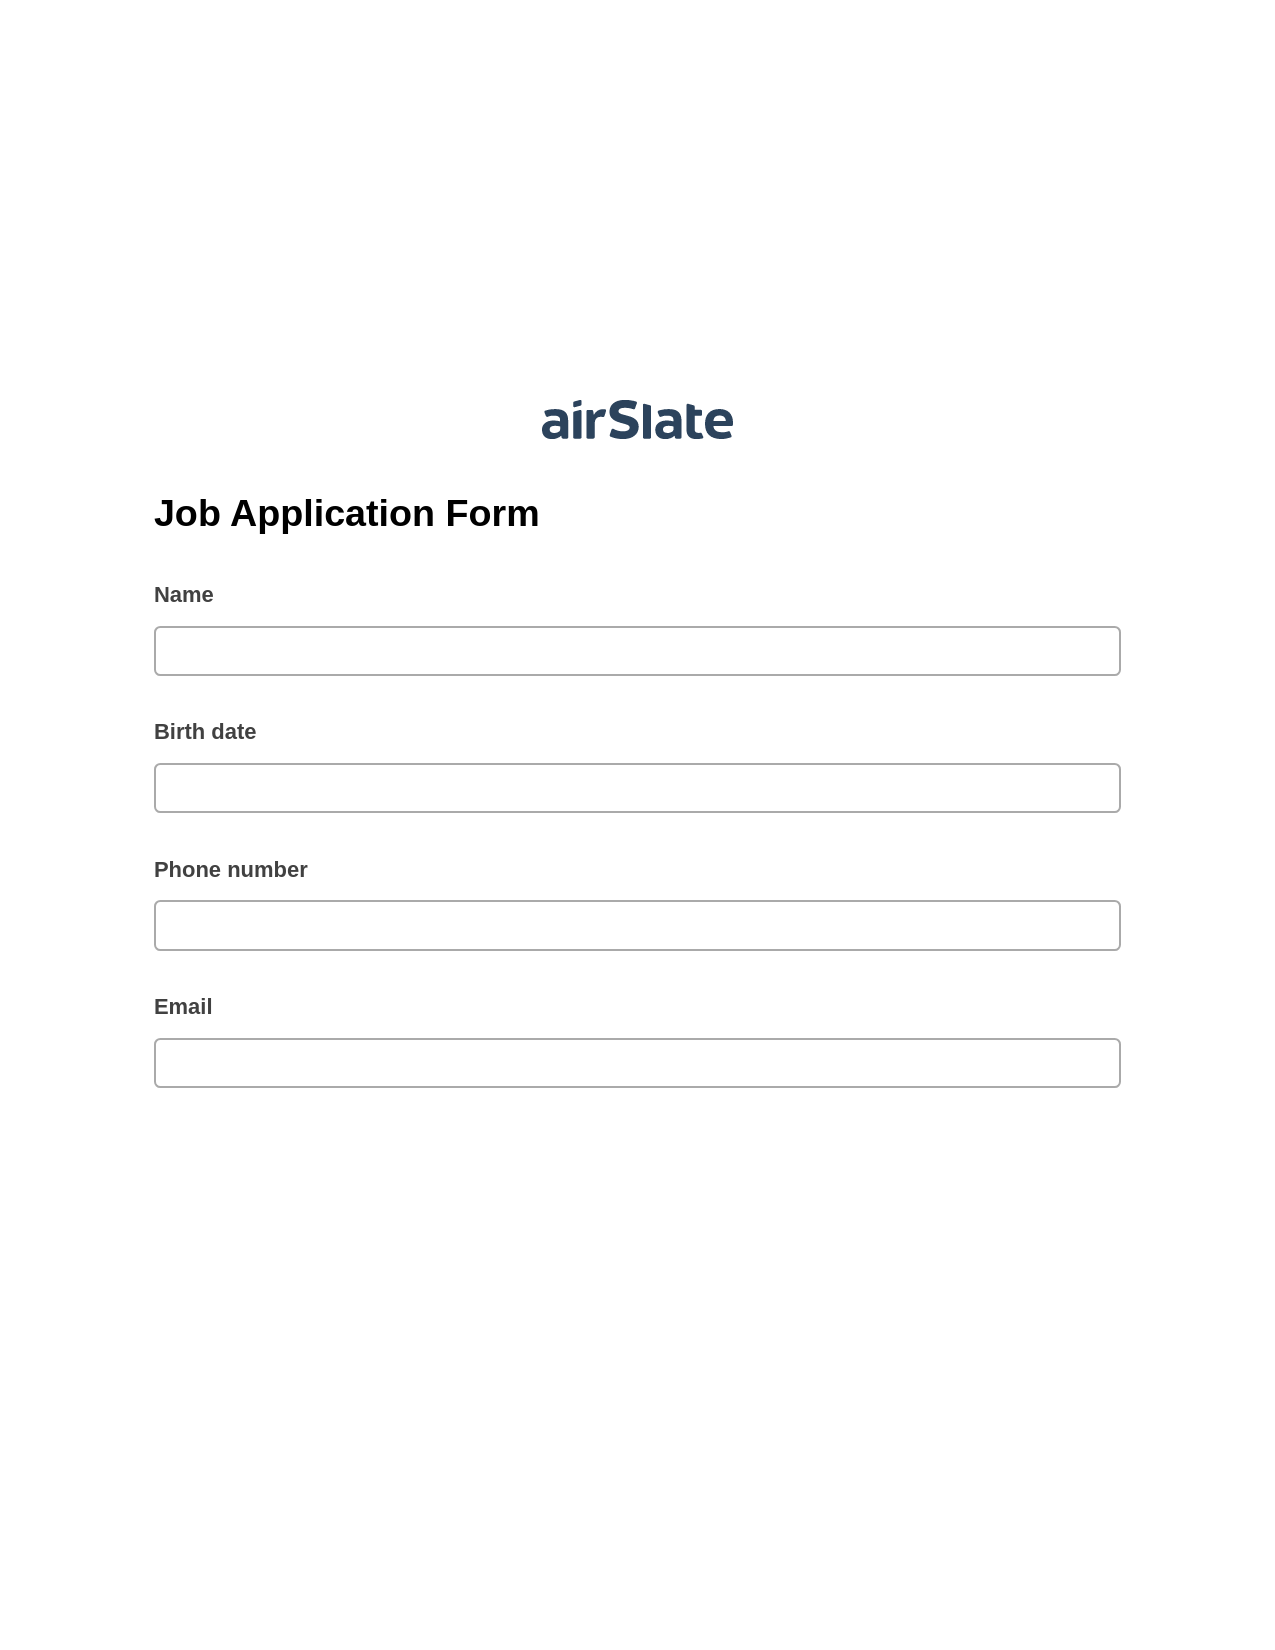 Job Application Form Pre-fill from MySQL Dropdown Options Bot, Update Salesforce Record Bot, Post-finish Document Bot